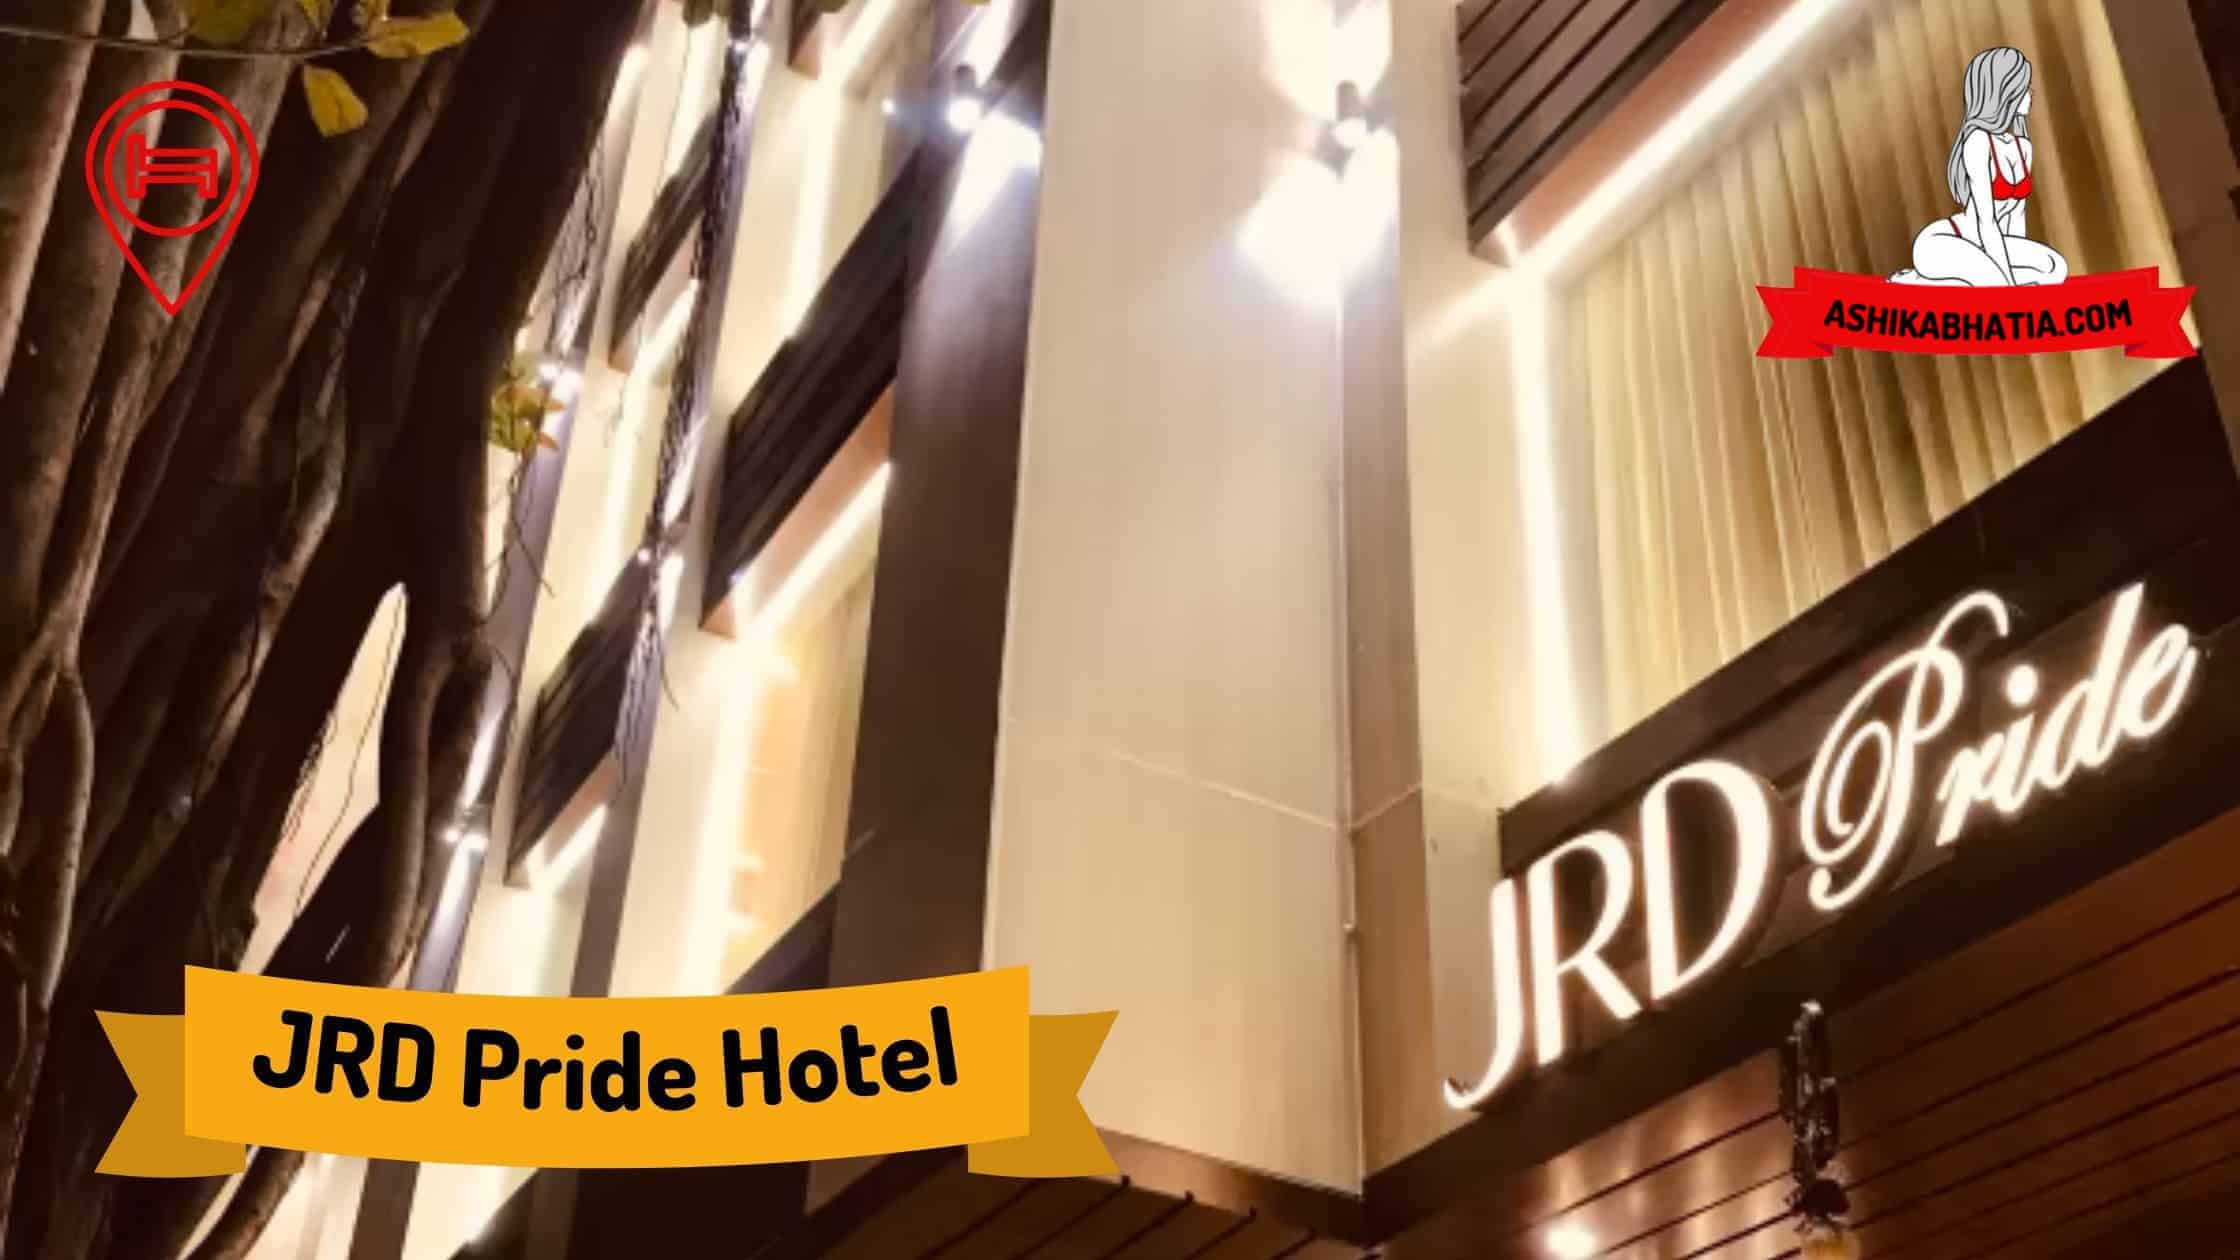 JRD Pride Hotel Escorts